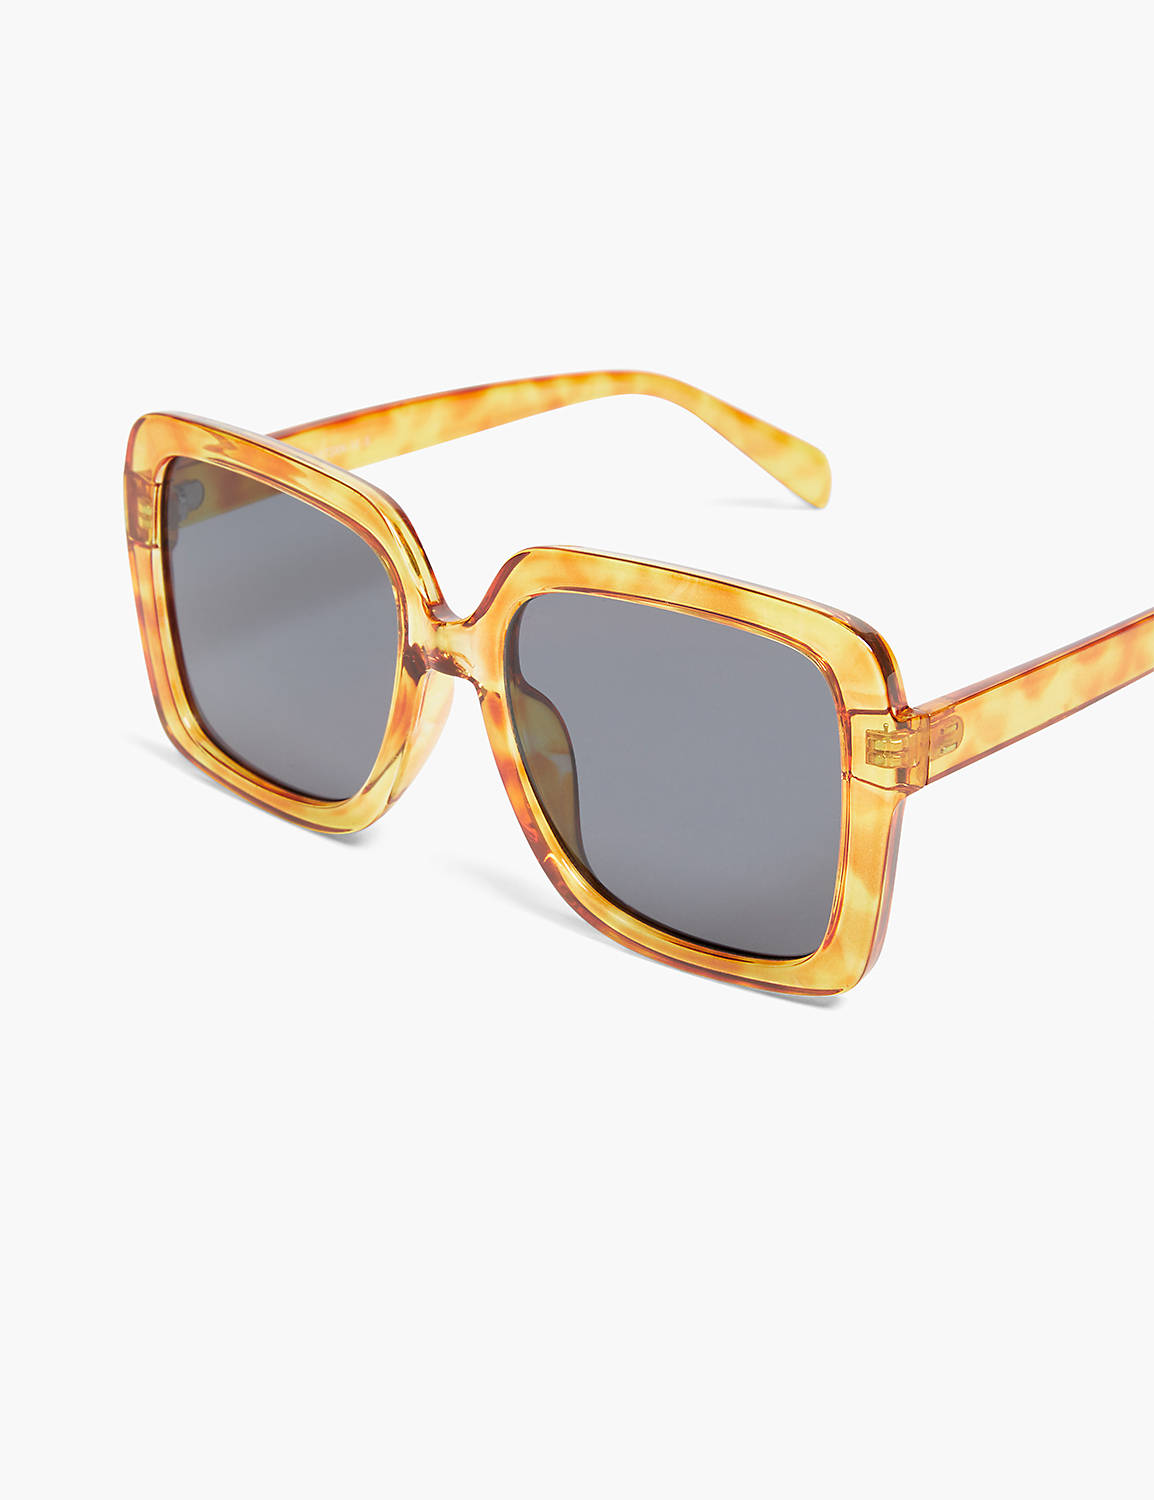 Blonde Tort Square Sunglasses Product Image 1